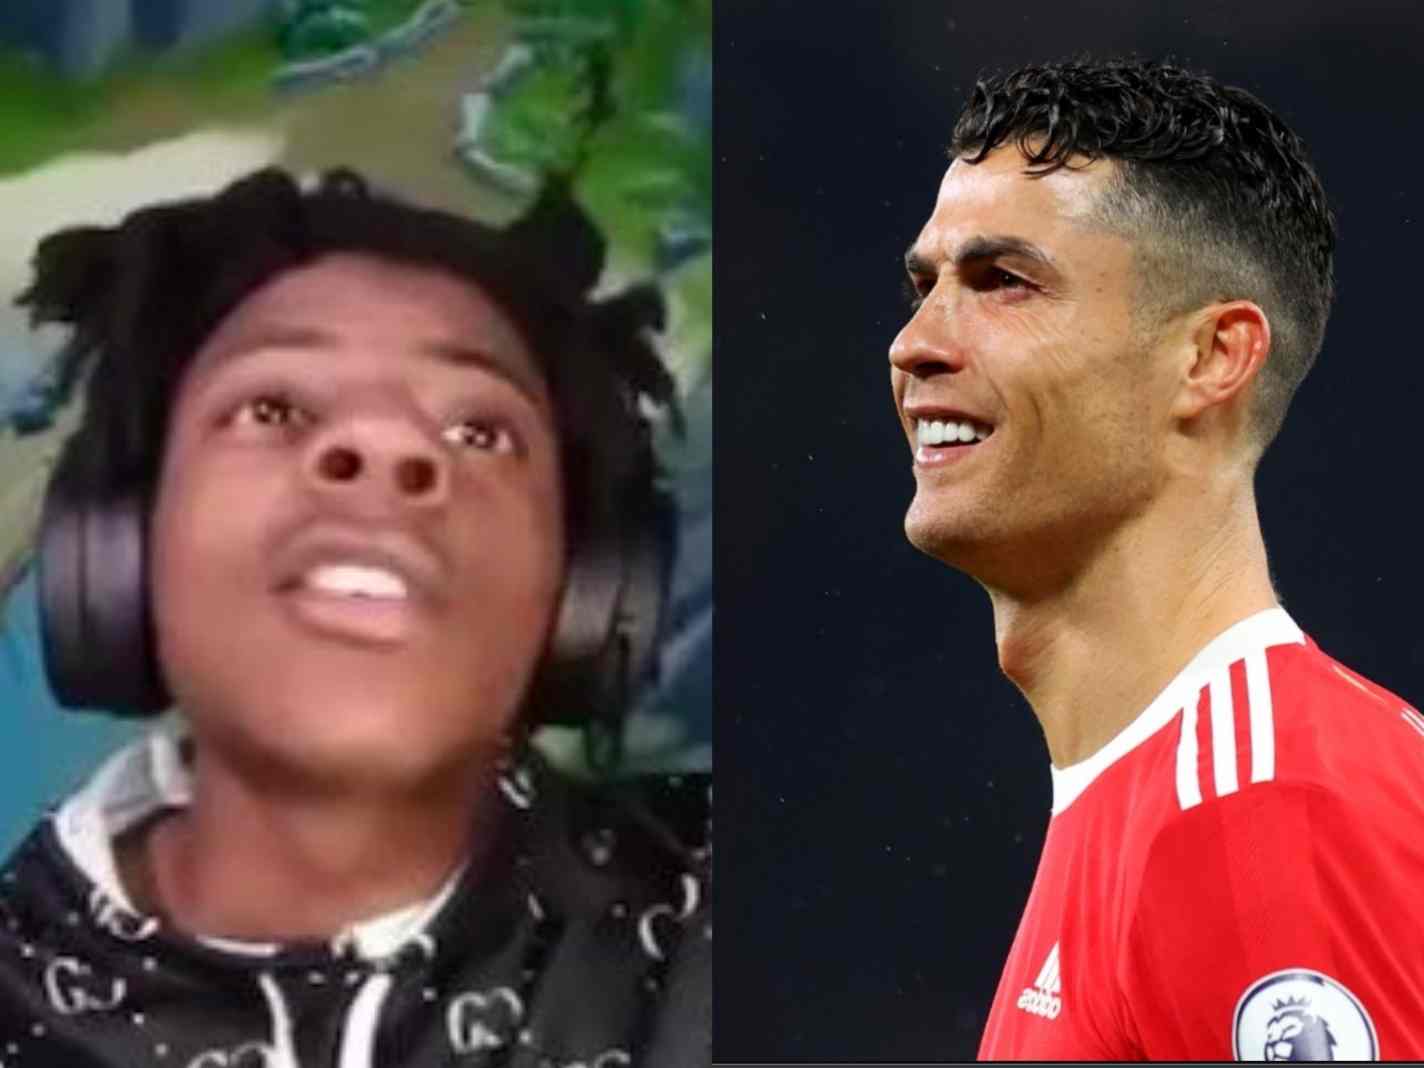 Who is ishowspeed? The YouTube streamer refashioning Cristiano Ronaldo ‘Siu’